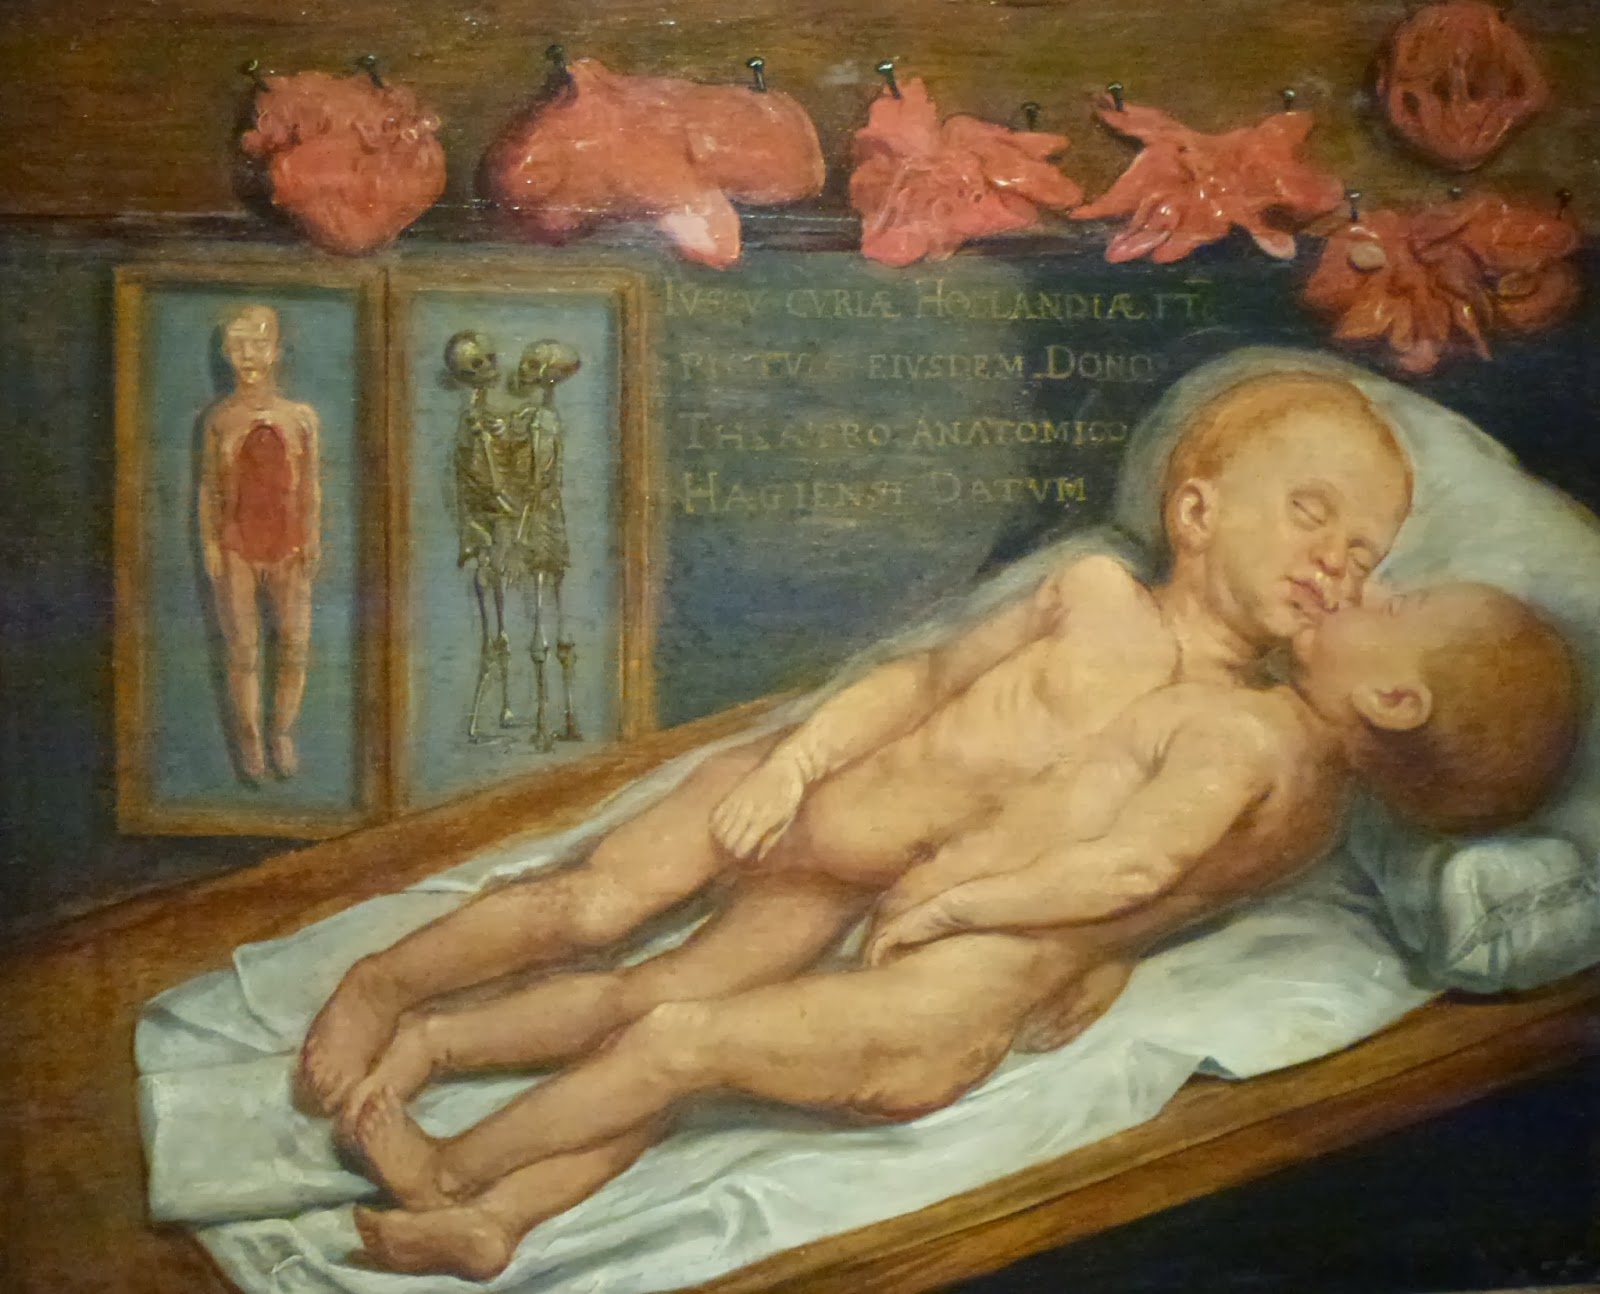 Corpses of Siamese twins, Everard Crijnsz. van der Maes, 1630, The Hague Historical Museum